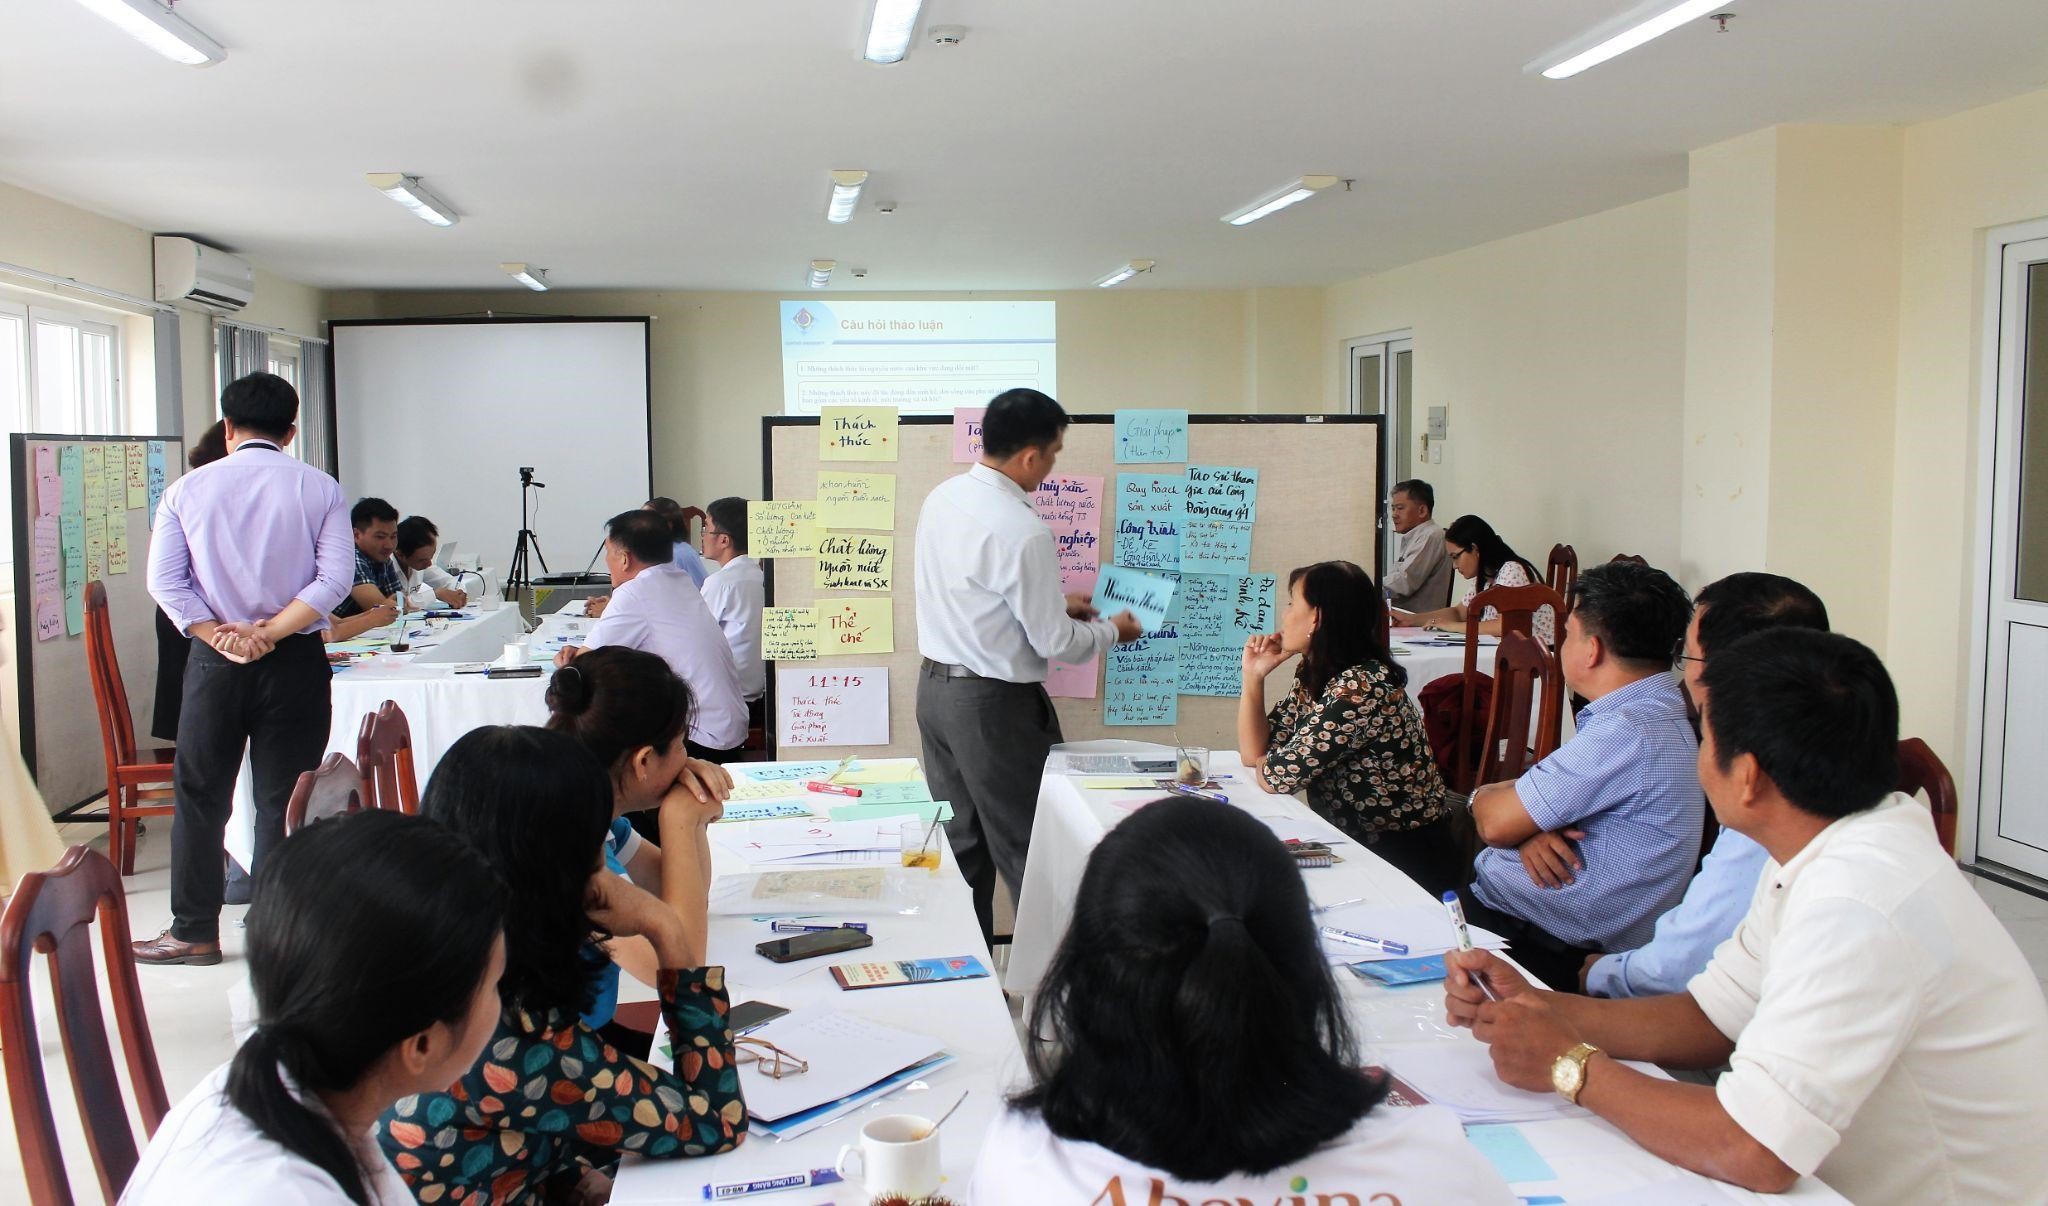 Workshop: “Livelihood, women and water scarcity in the Vietnamese Mekong Delta”